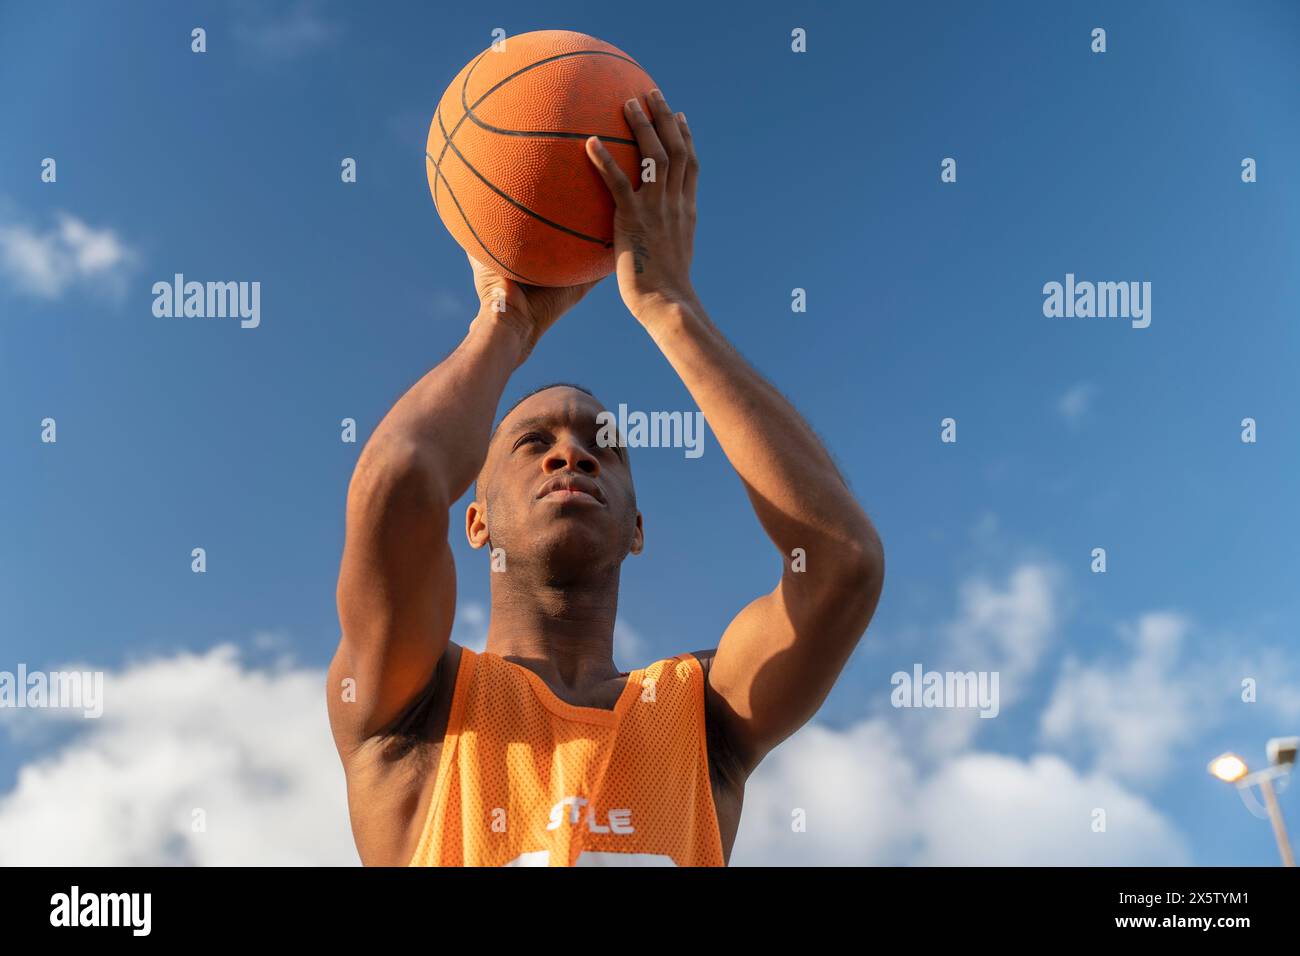 Man holding basketball ball against sky Stock Photo